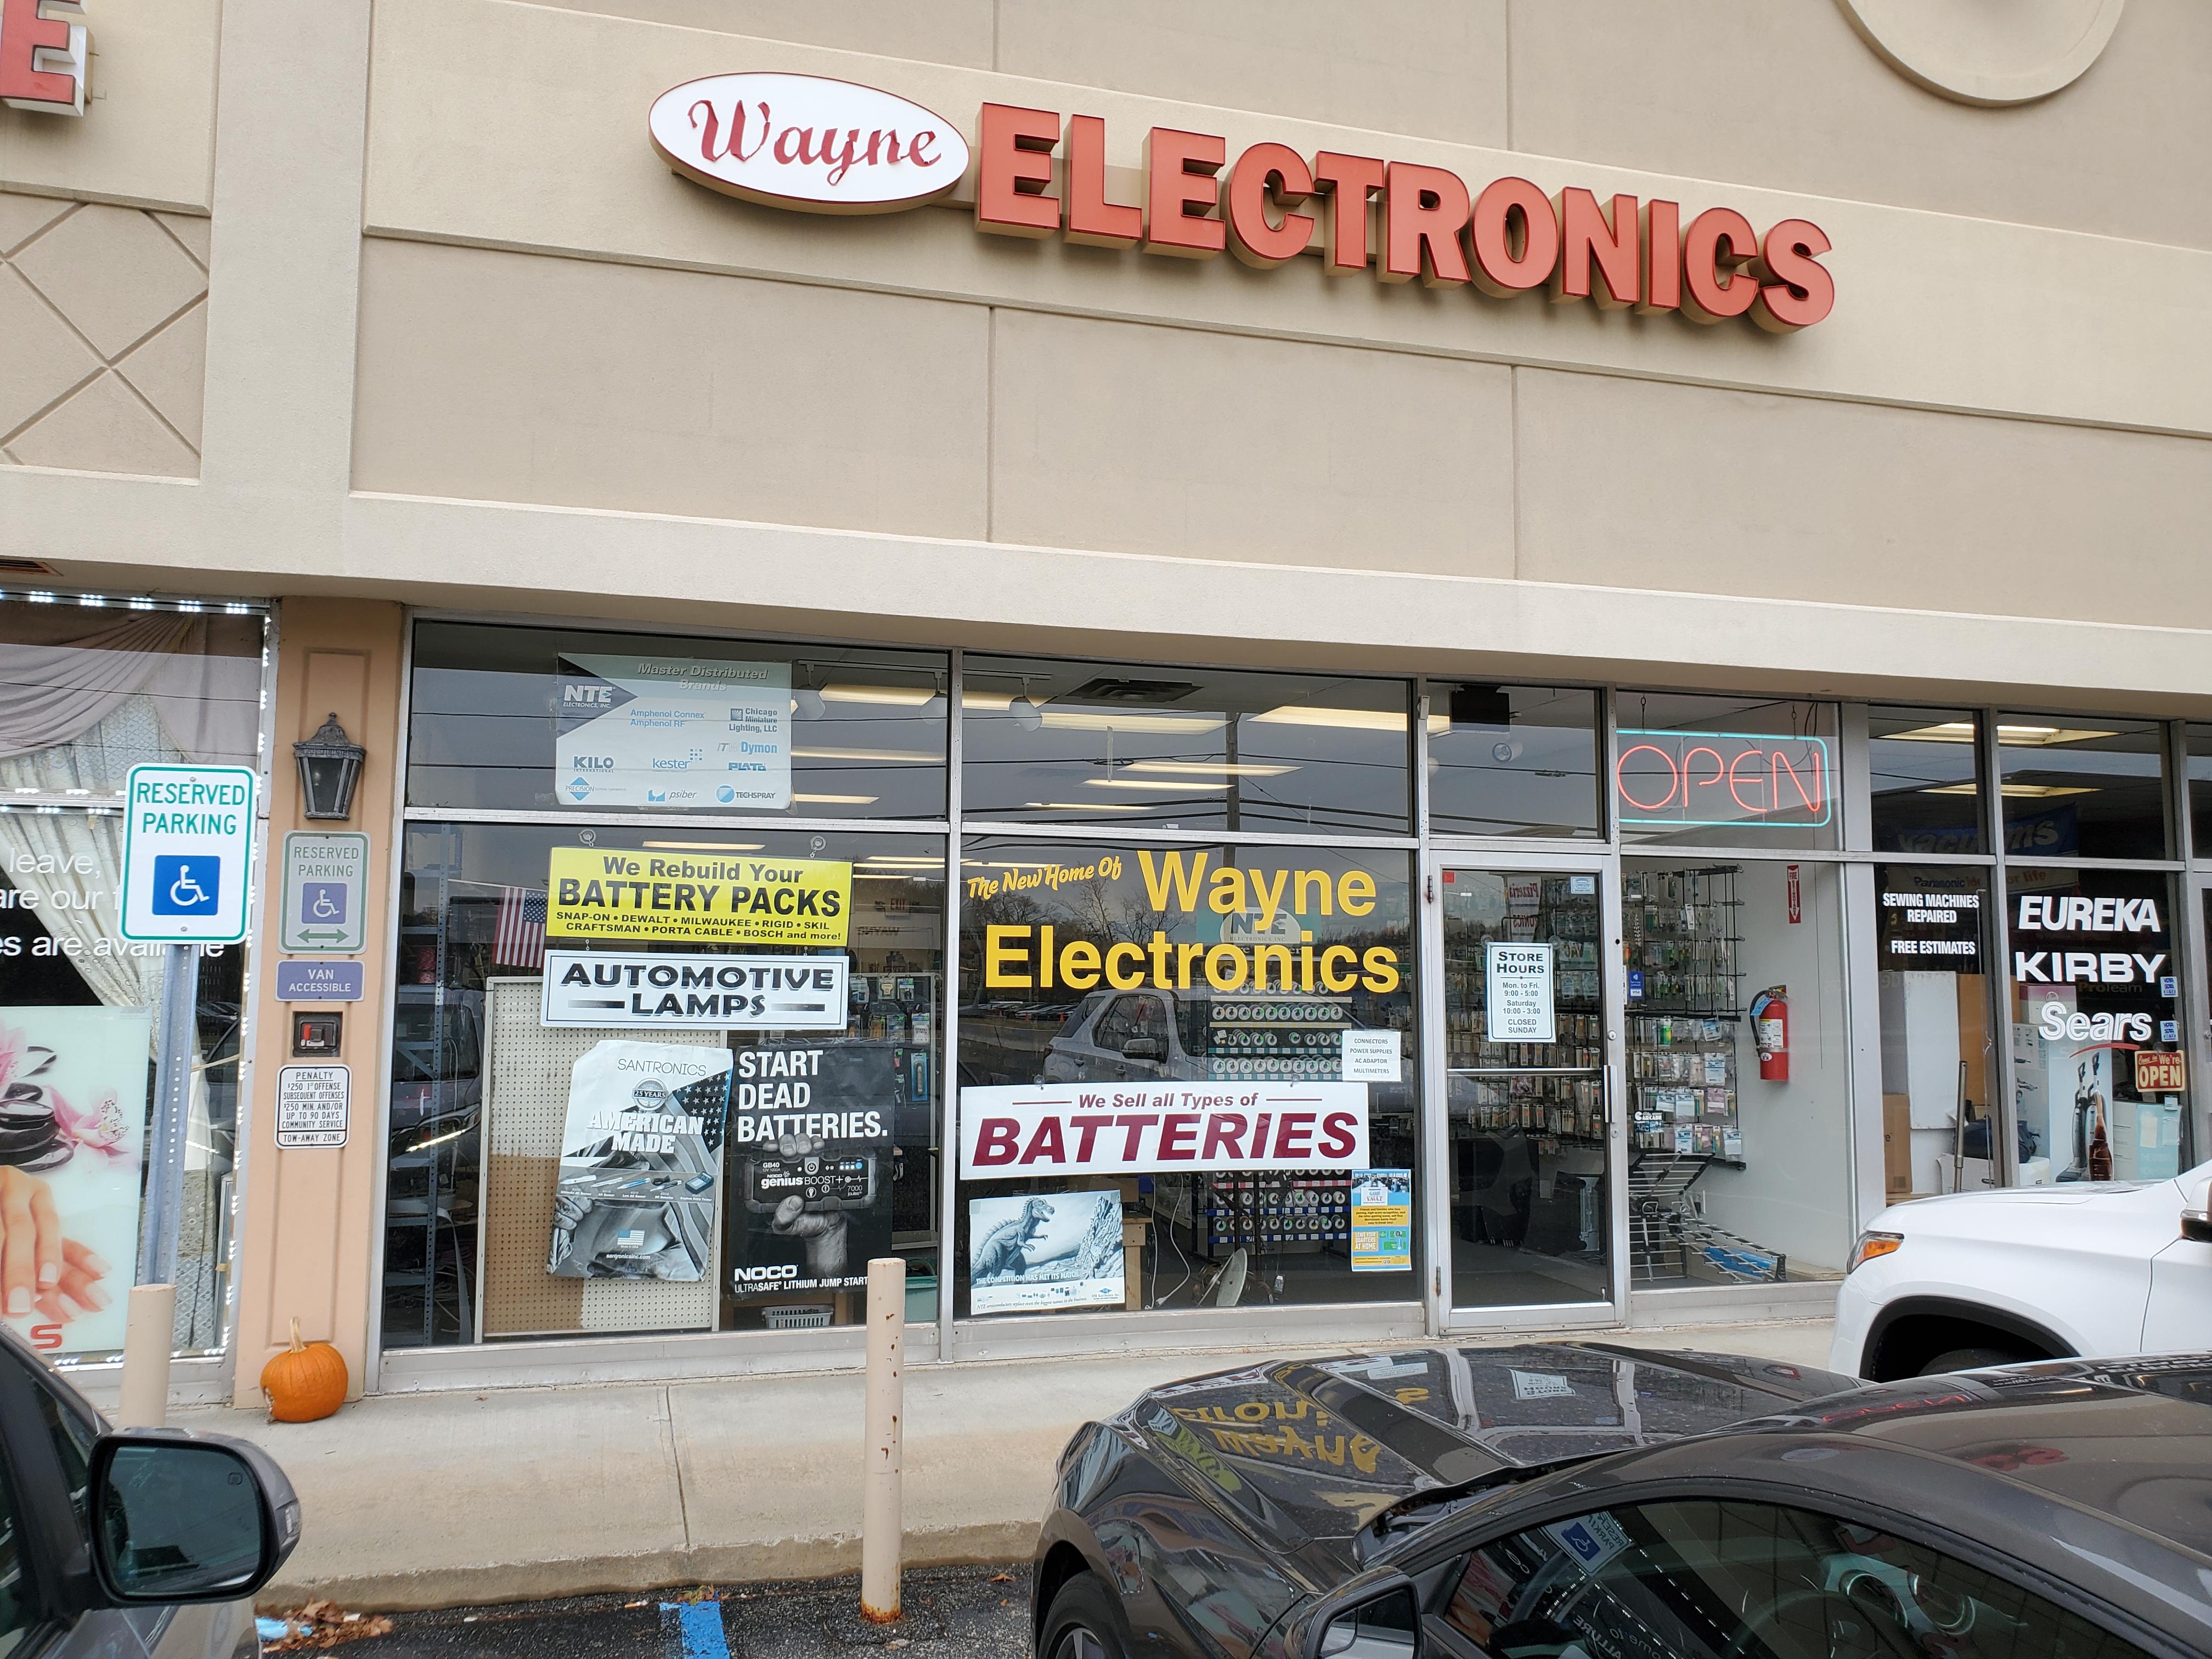 Wayne Electronics is like the old Radio Shack so many loved.